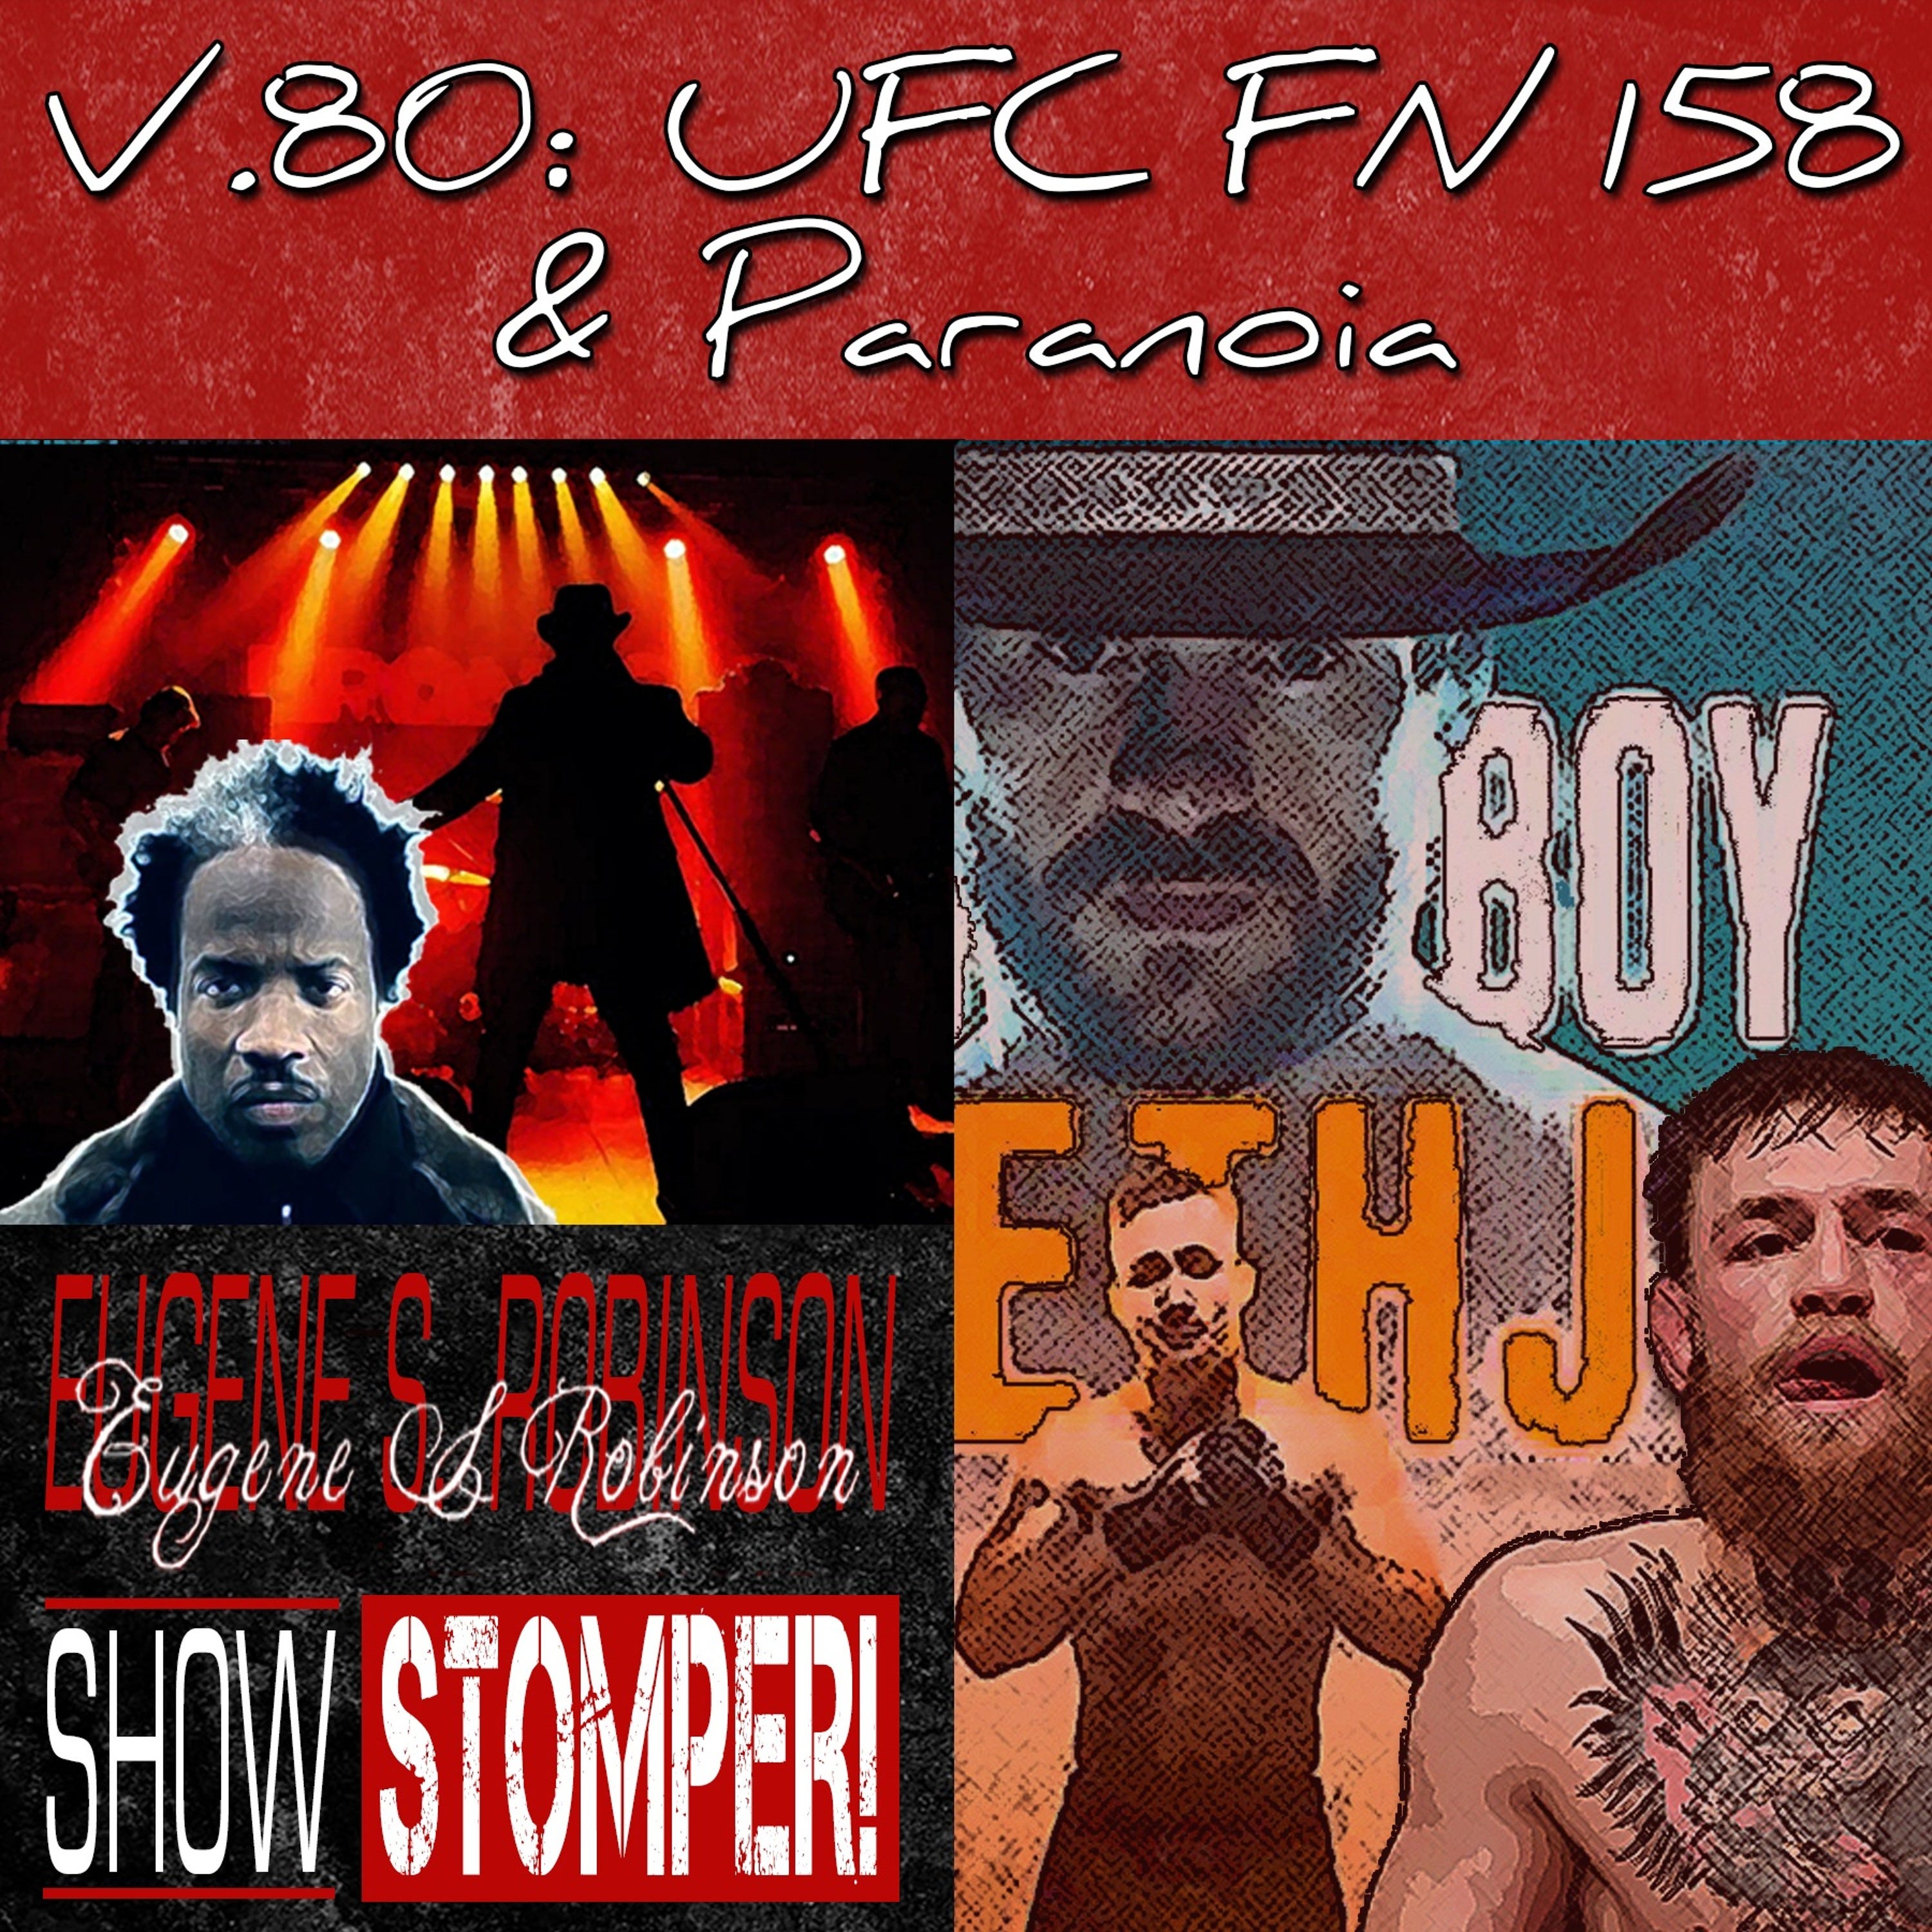 V.80 UFC FN 158 + Paranoia On The Eugene S. Robinson Show Stomper!